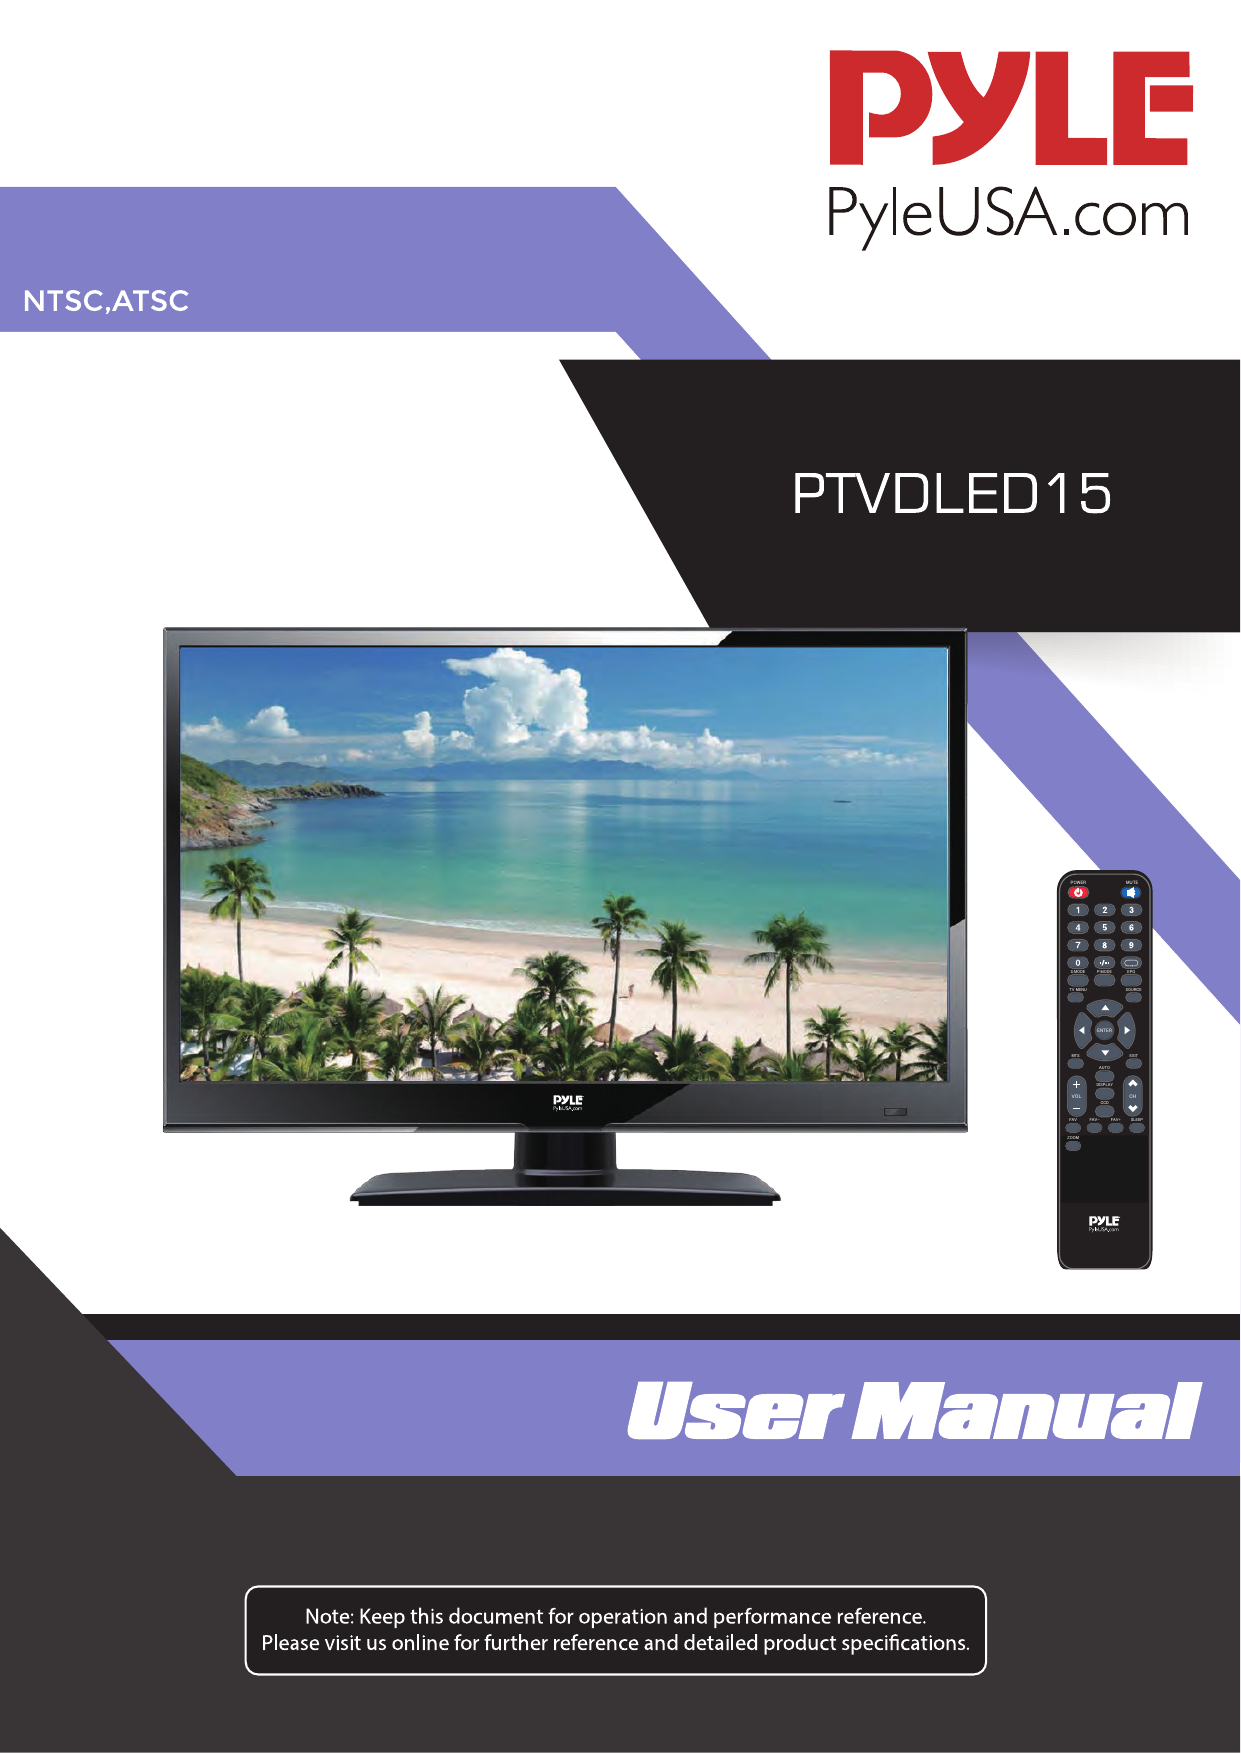 HD Flat Screen TV Pyle PTVLED15 15.6" LED TV 